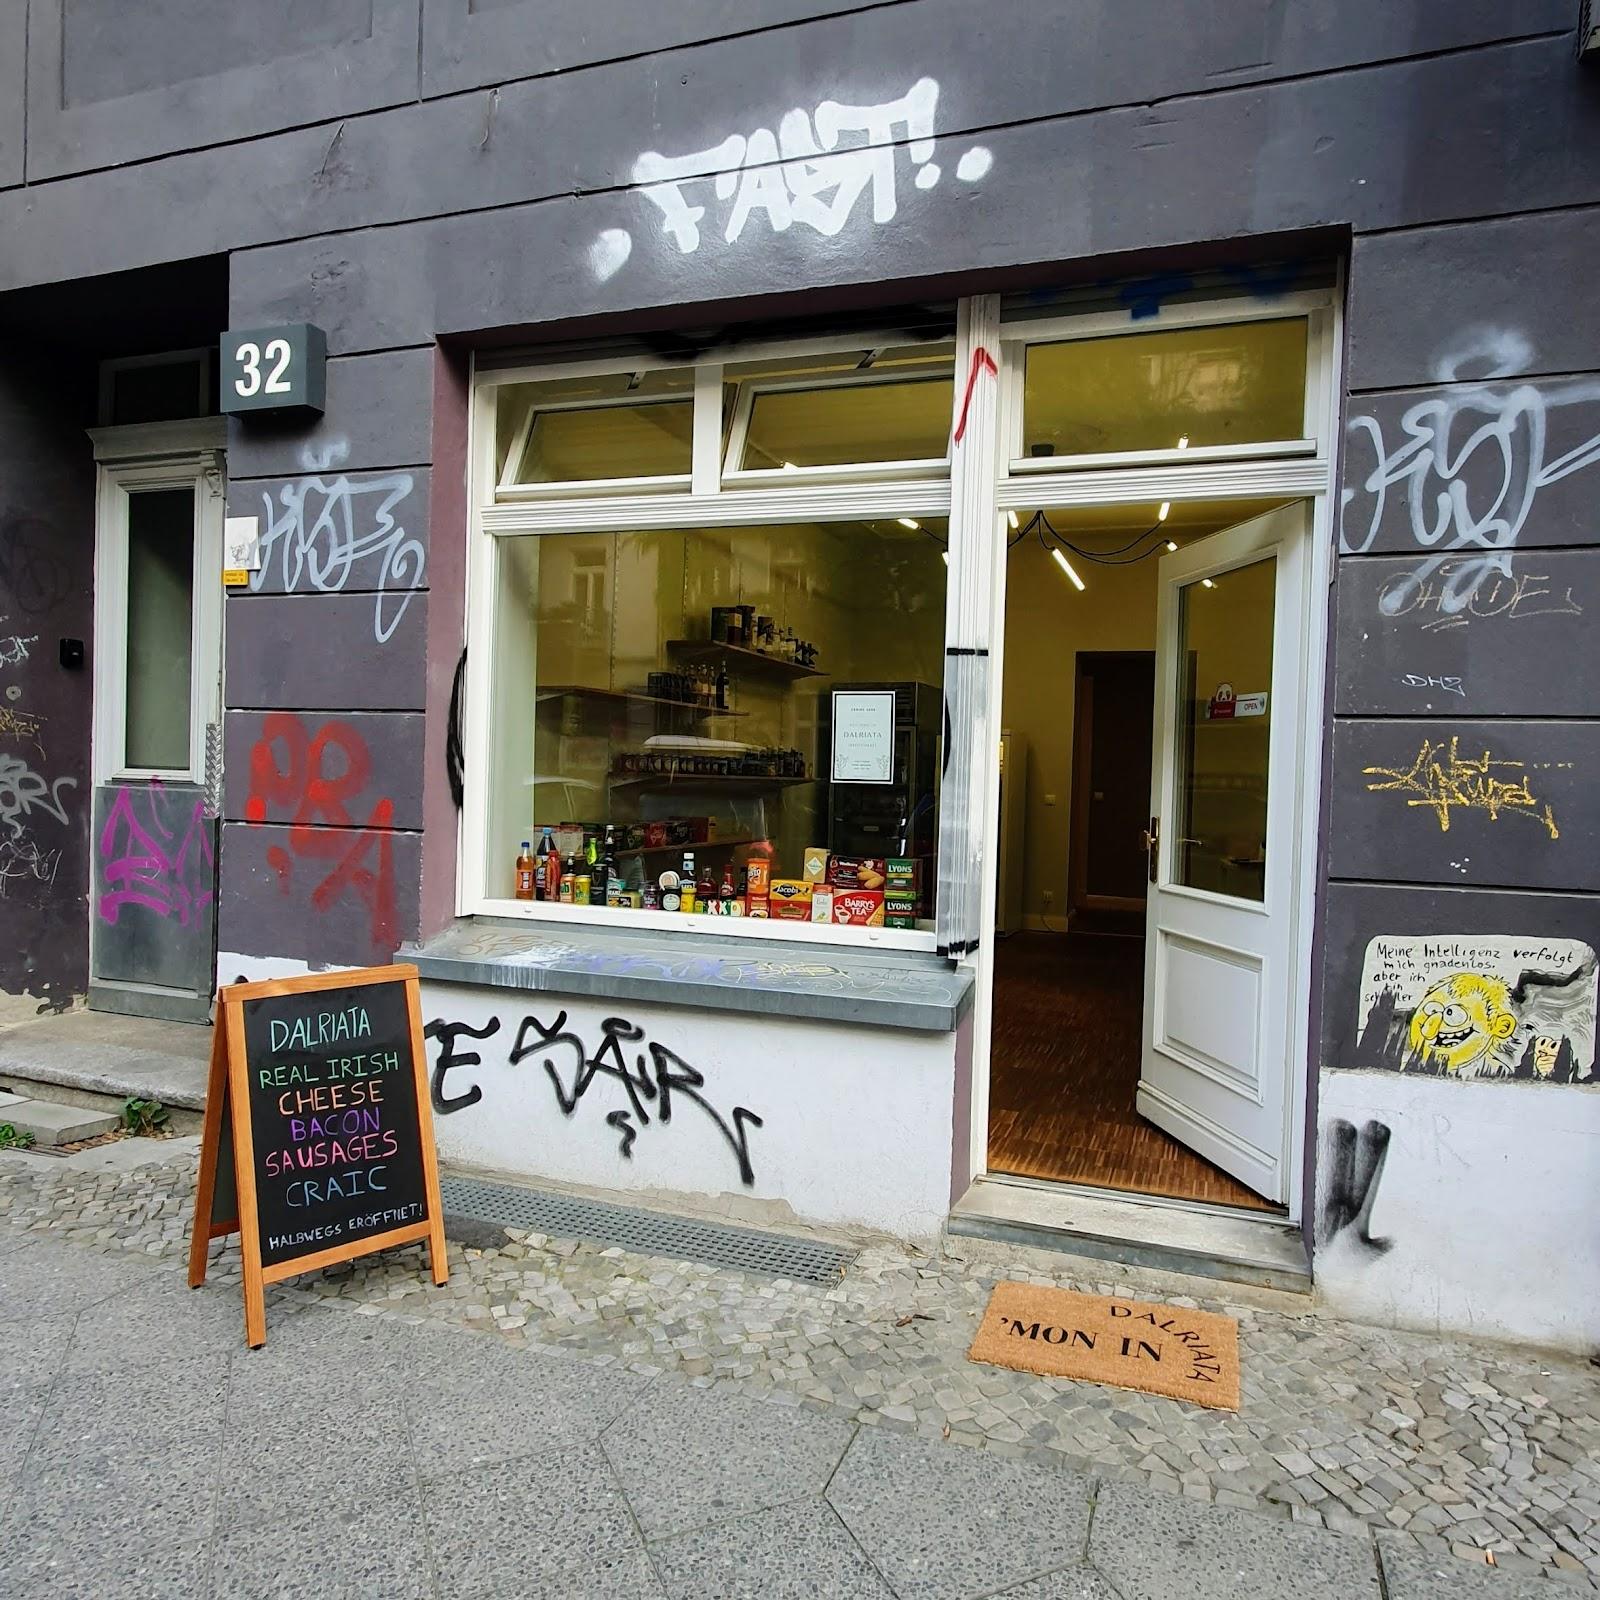 Restaurant "Dalriata Inselfeinkost Irish British Grocery" in Berlin